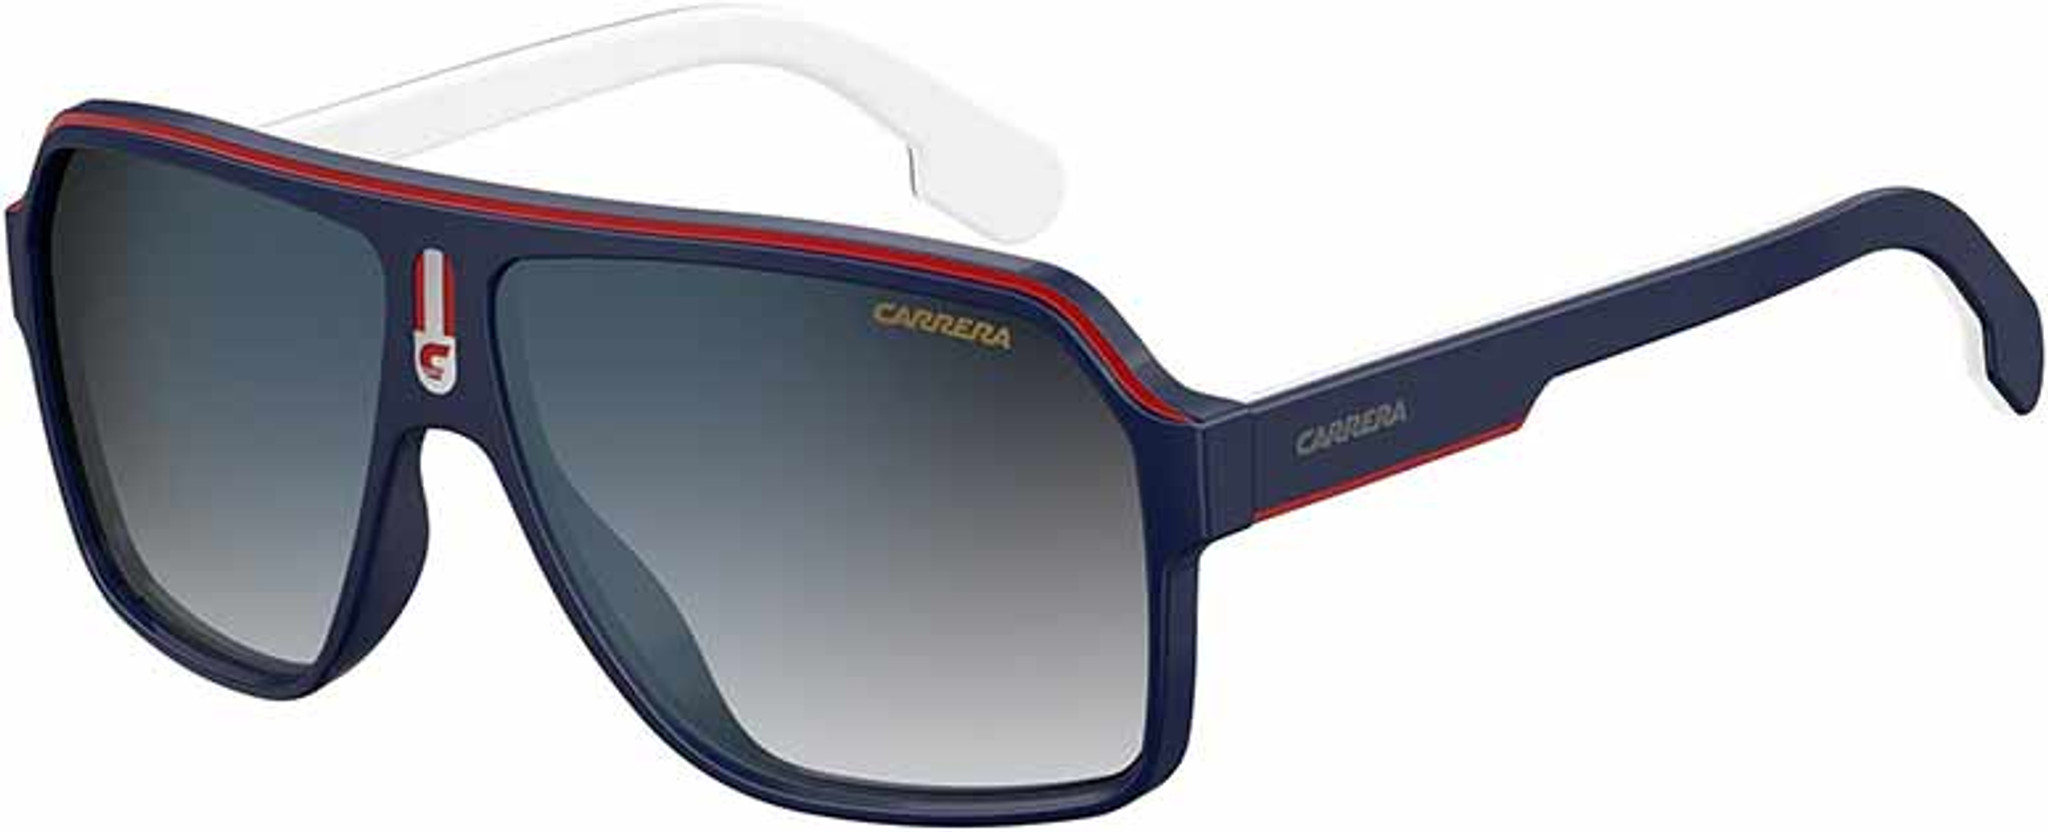 Carrera Men's Sport Sunglasses